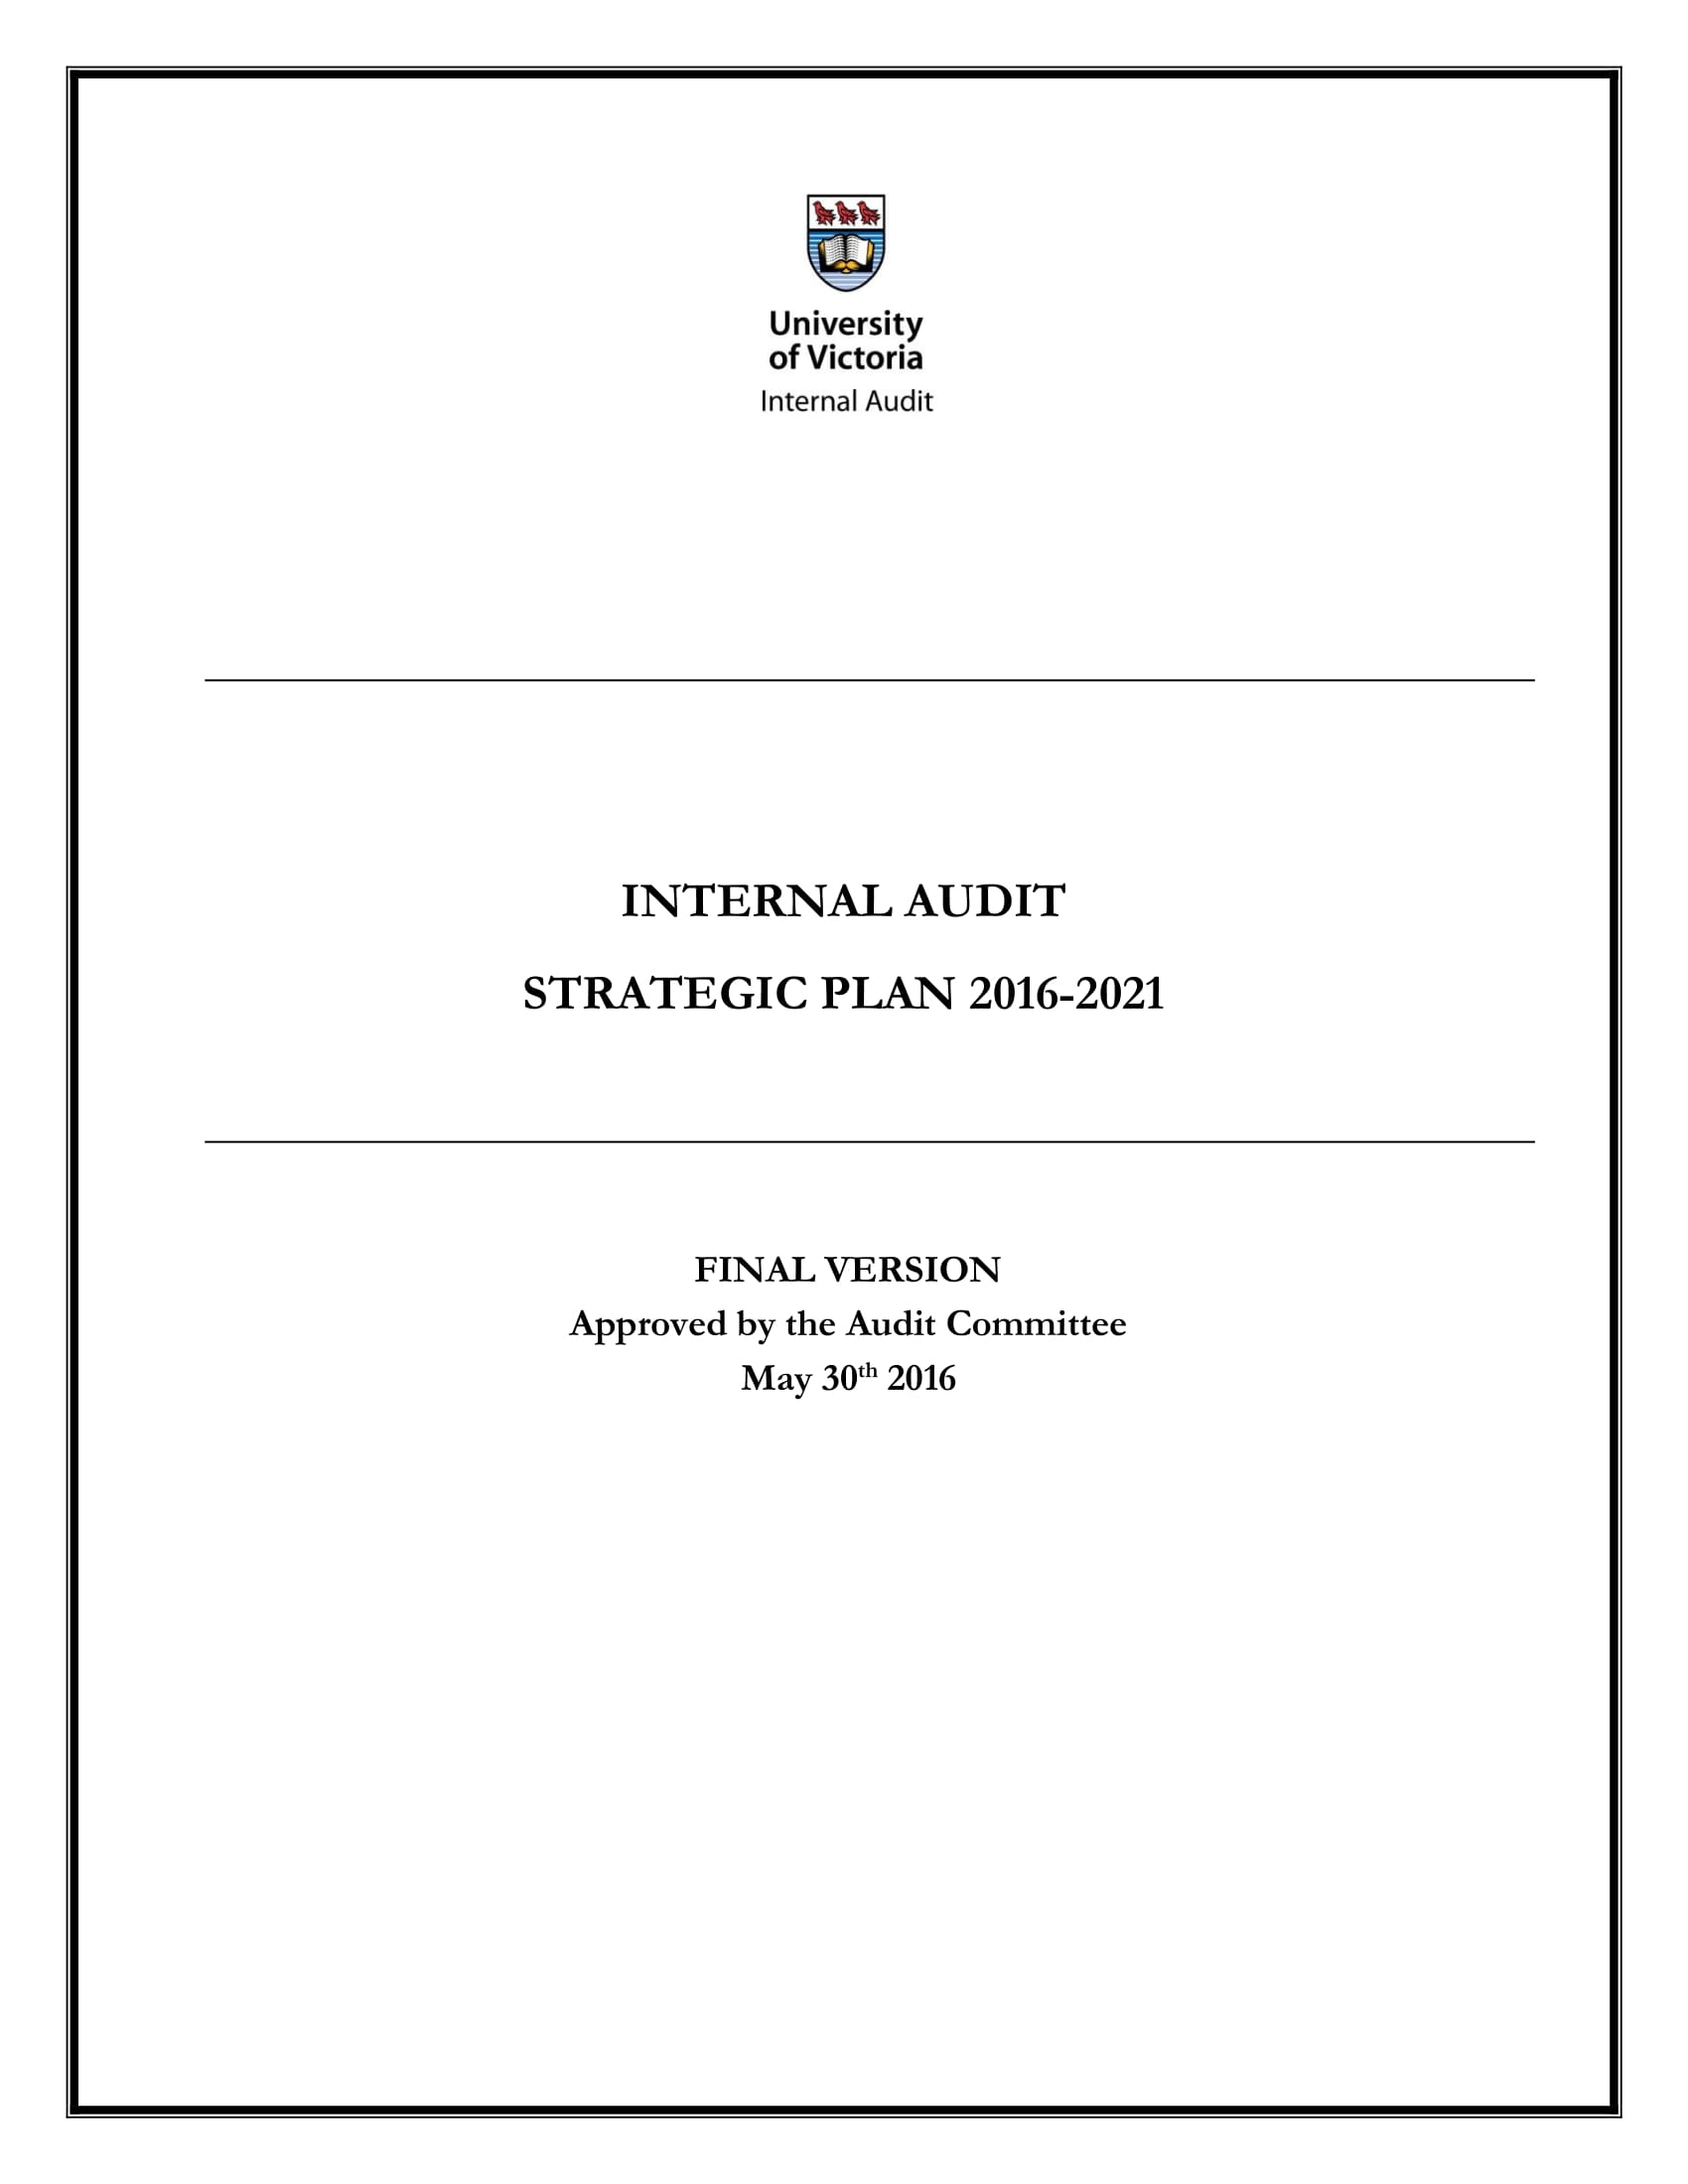 university of victoria internal audit strategic plan example